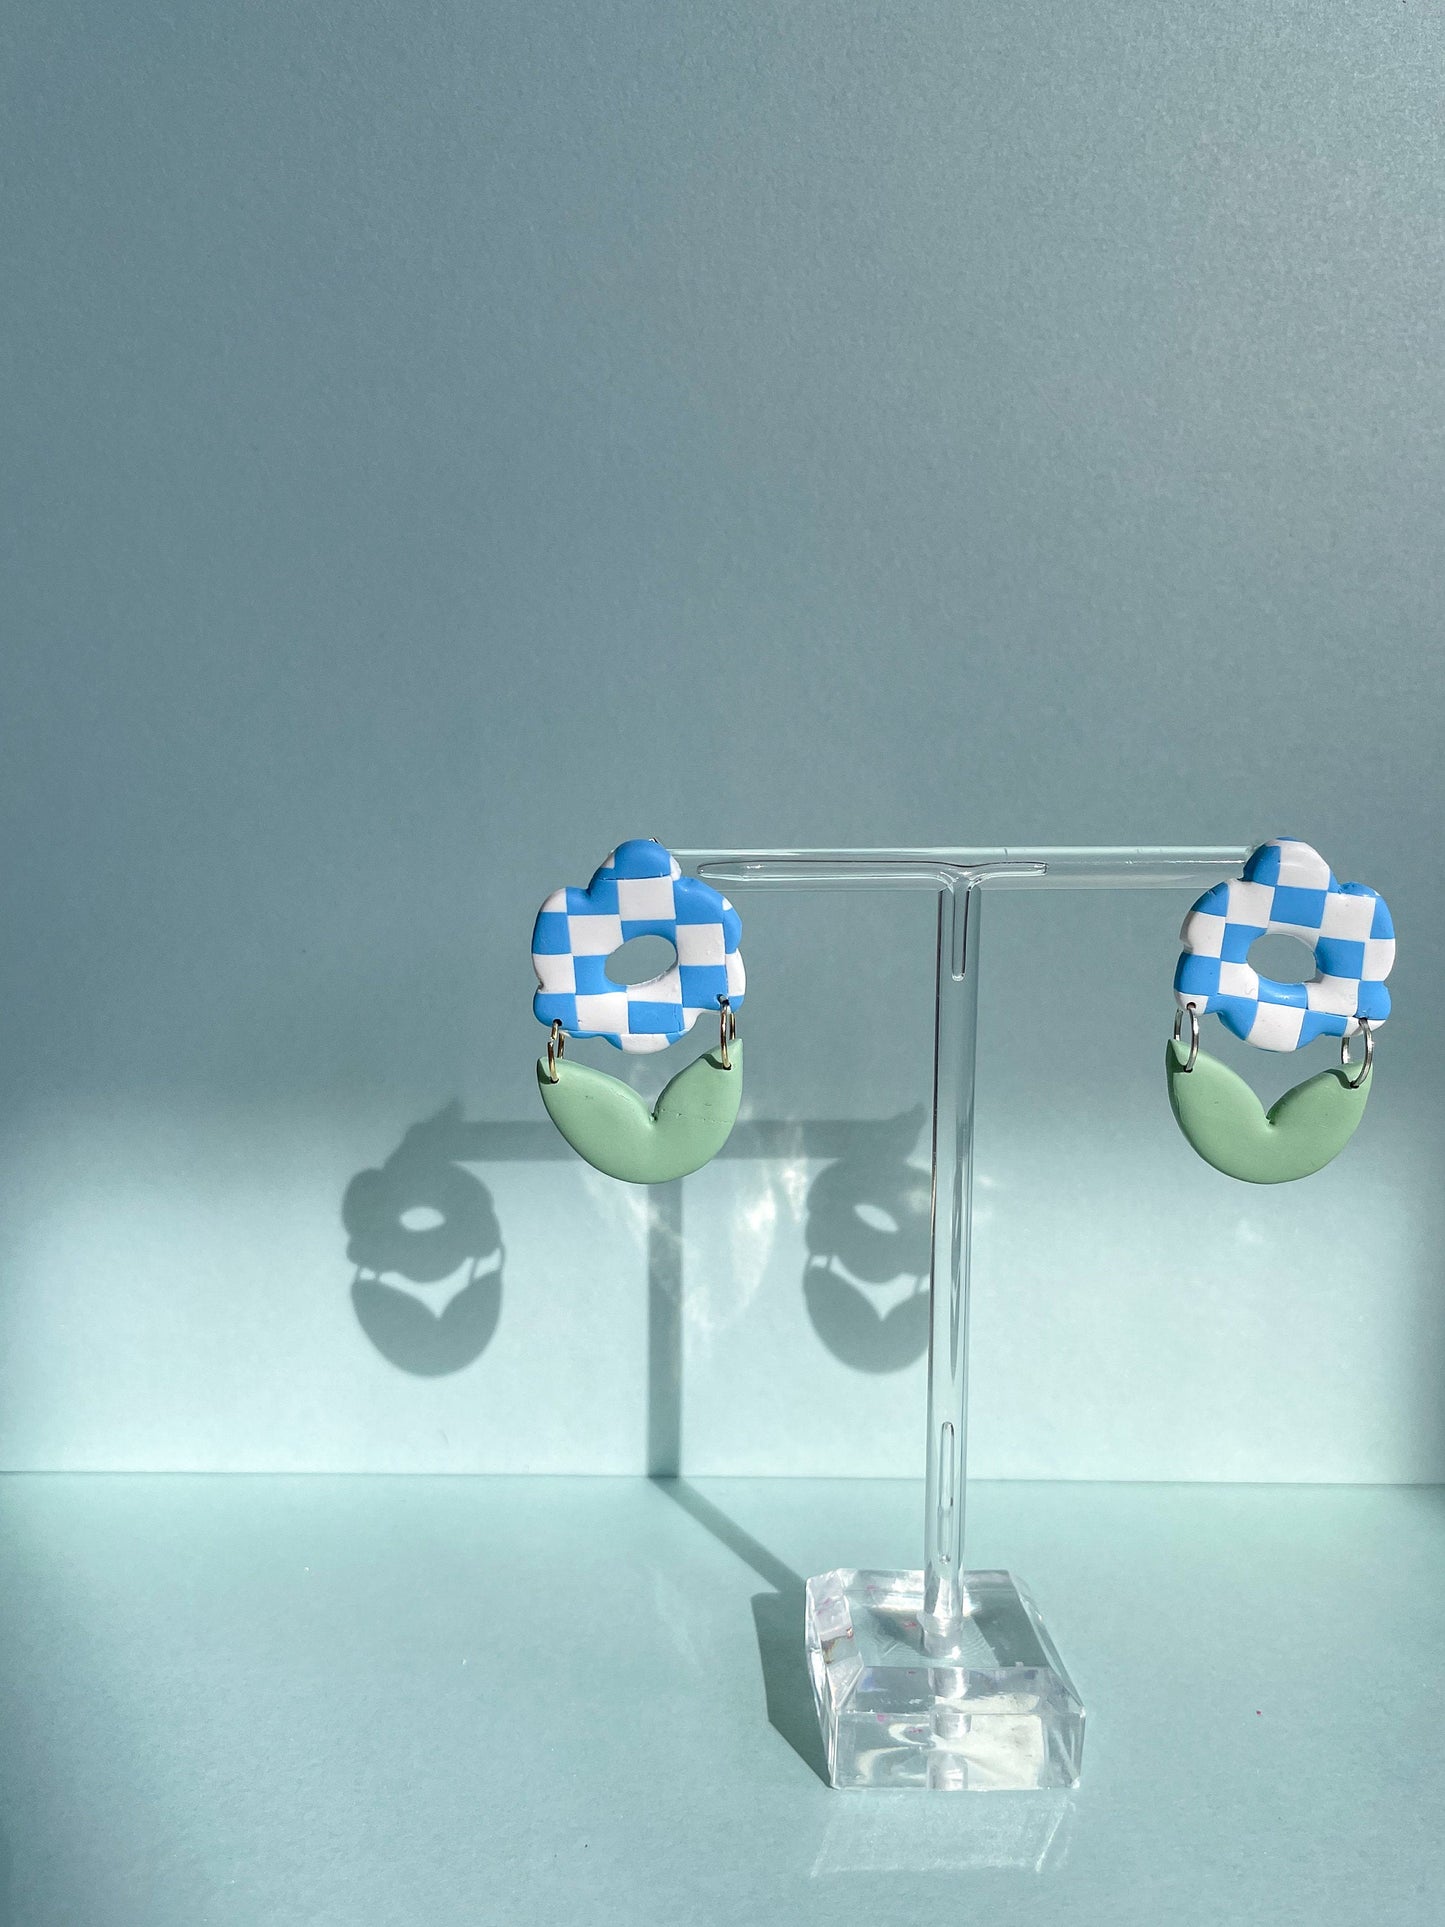 Checker Flower Studs//Flower Polymer Clay Earring//Statement Earring//Handmade Clay Earring//Spring Earring//Bee Earring